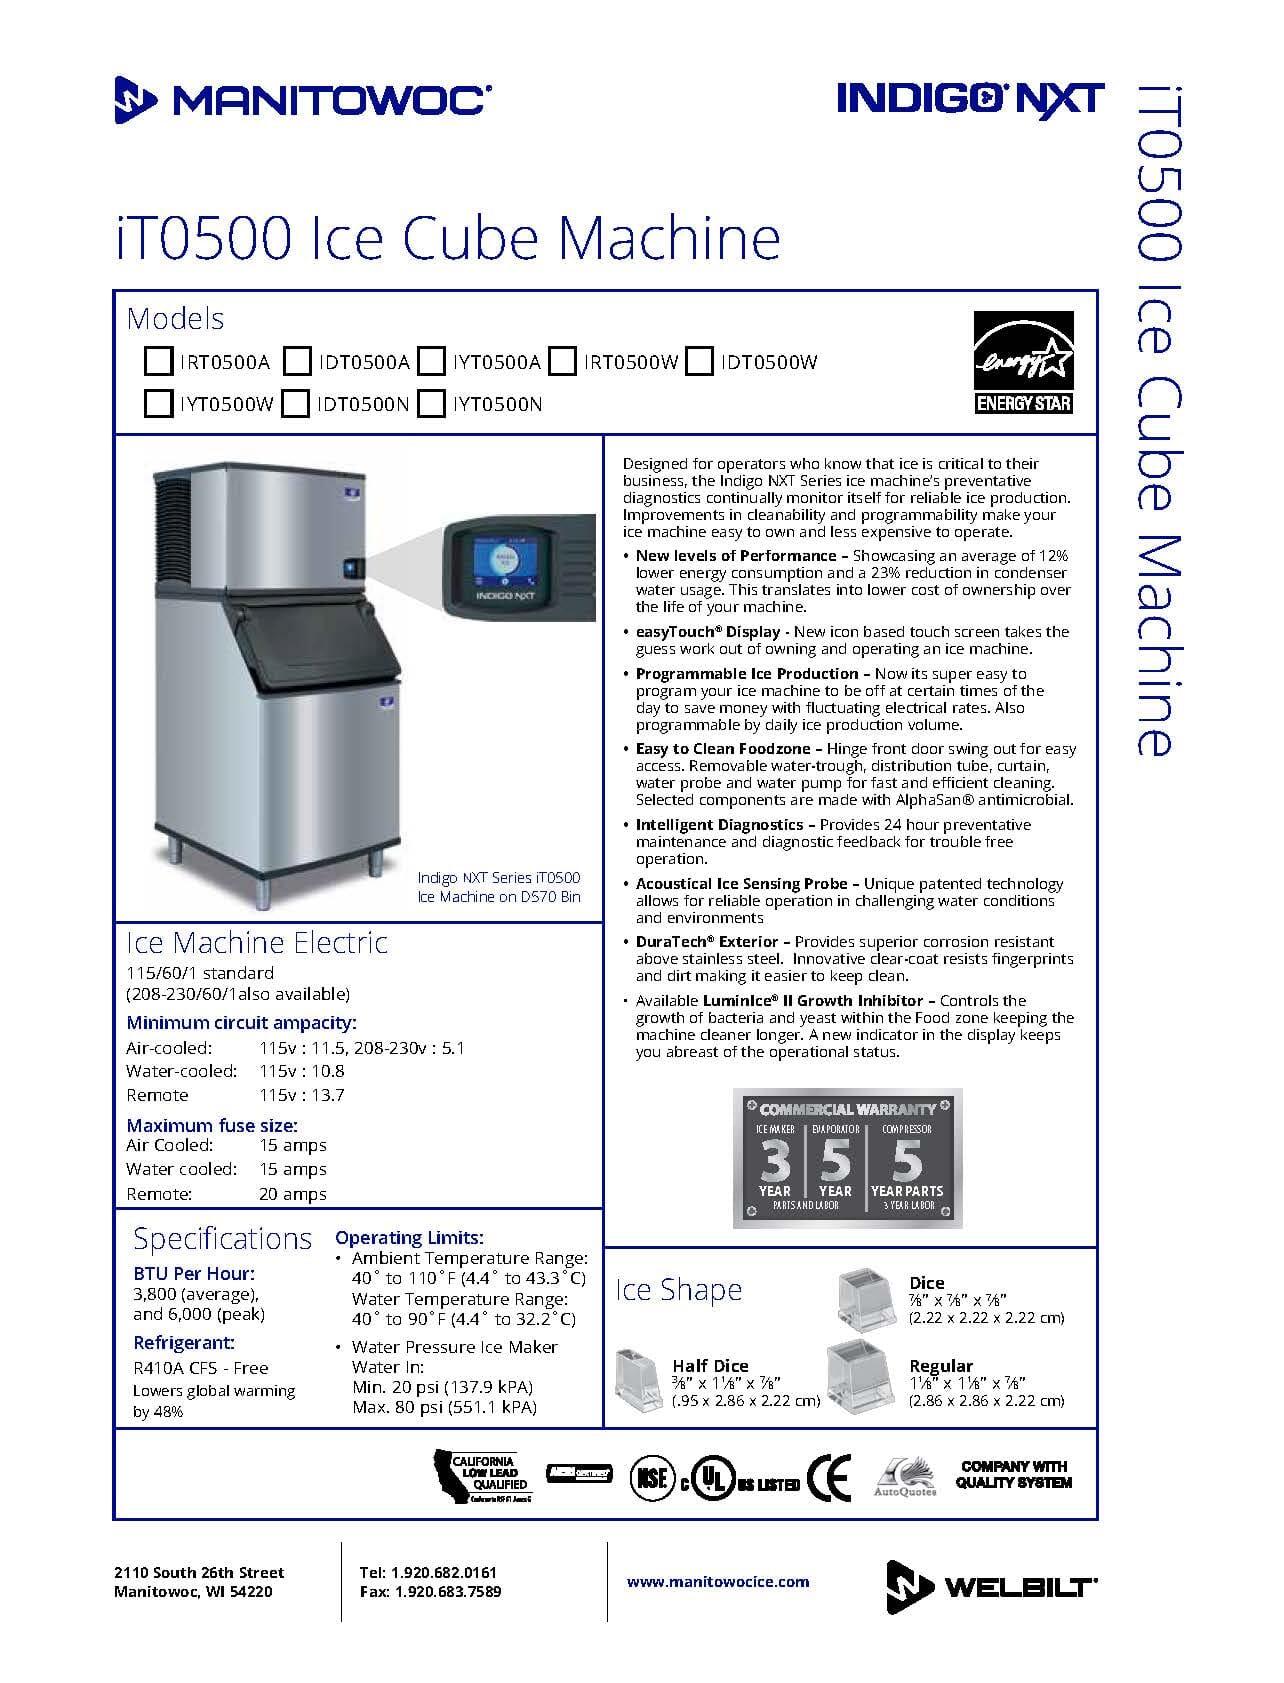 Manitowoc IYT0500A Indigo NXT 30" 550lb Air Cooled Half Dice Ice Machine Manitowoc 